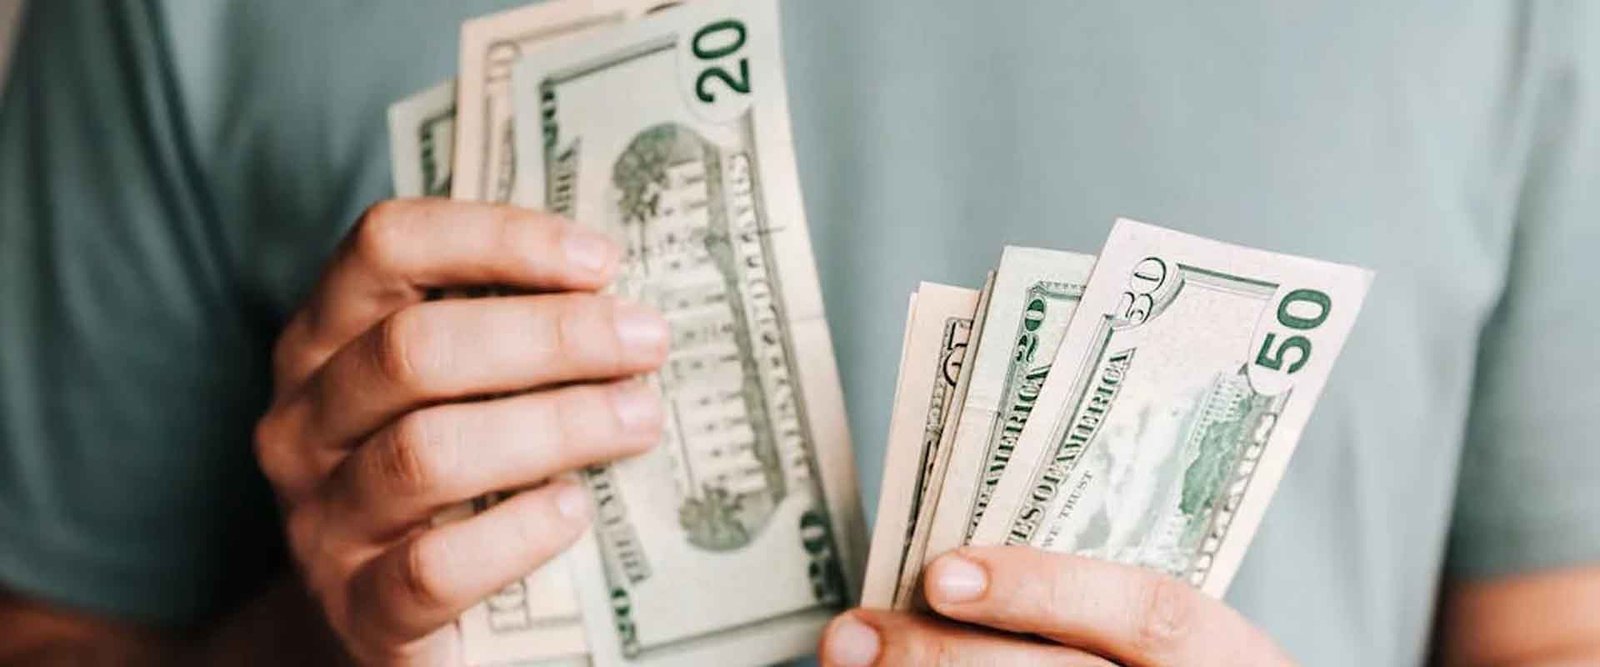 10 Easy Ways To Make Money Online